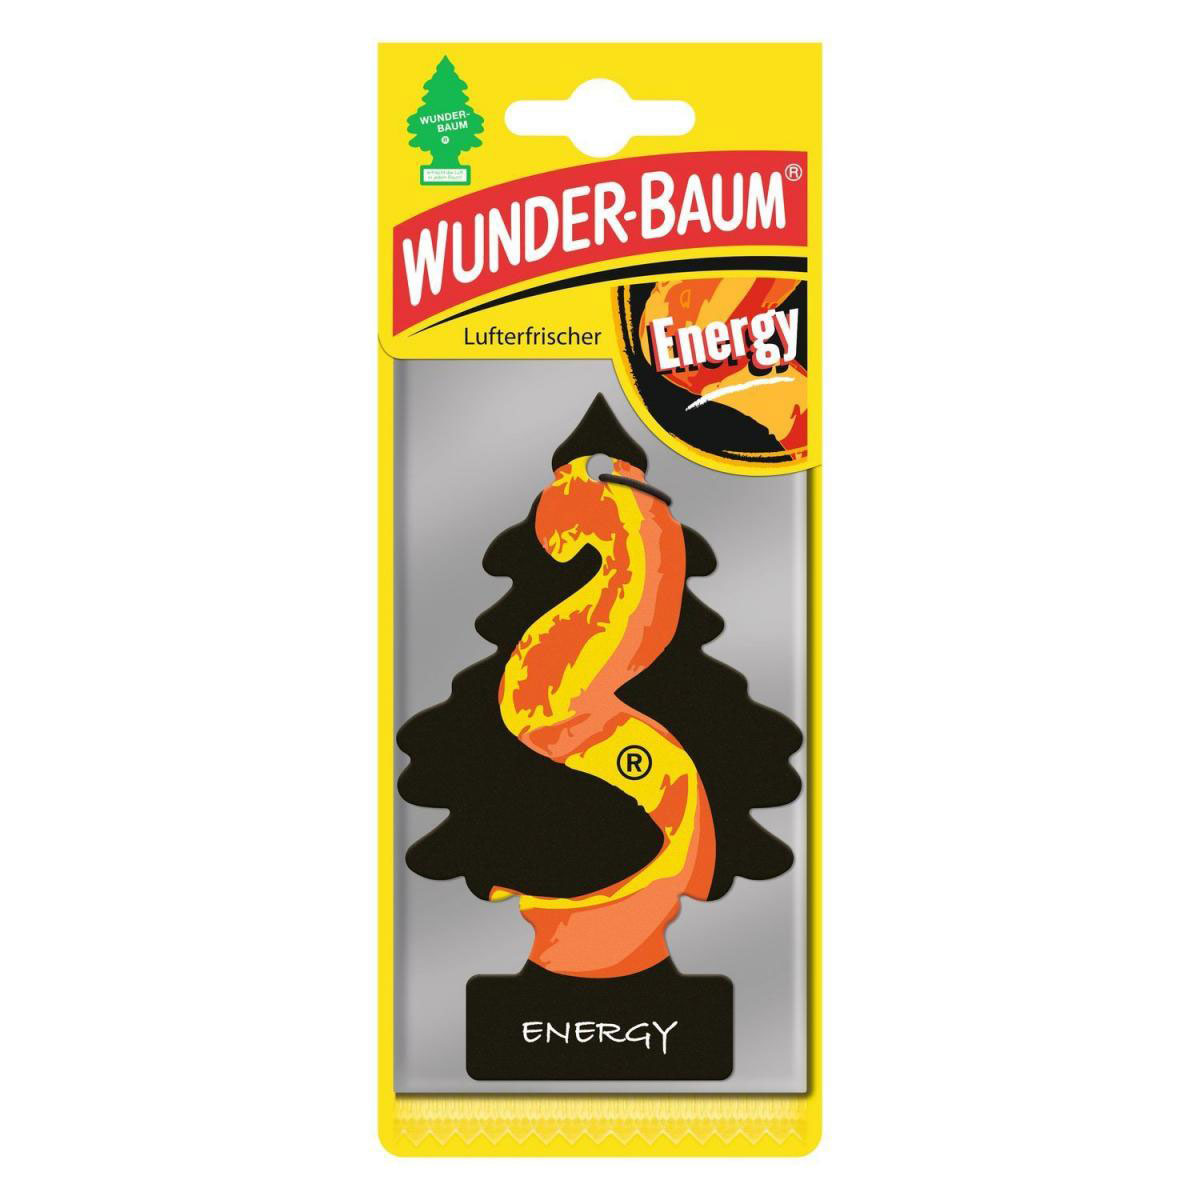 Original Wunderbaum Energy, Energy